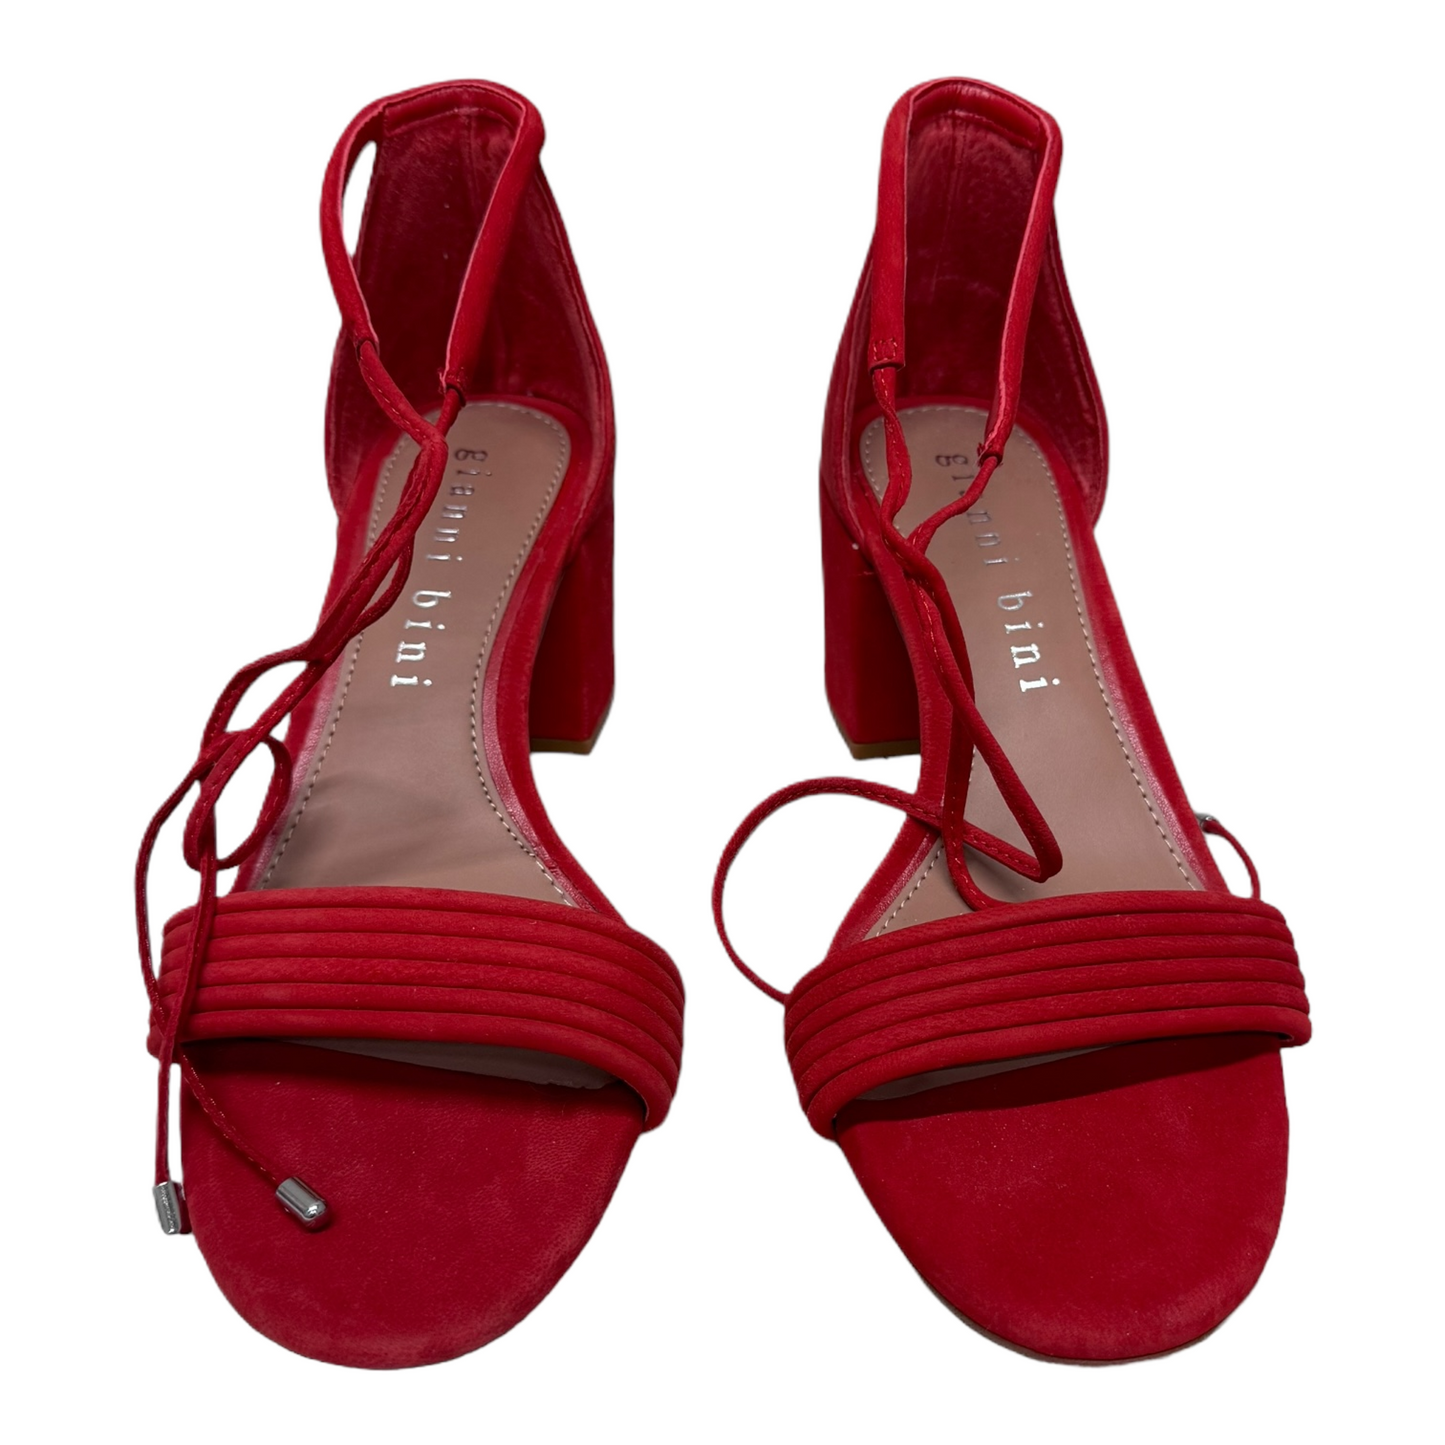 Sandals Heels Block By Gianni Bini  Size: 9